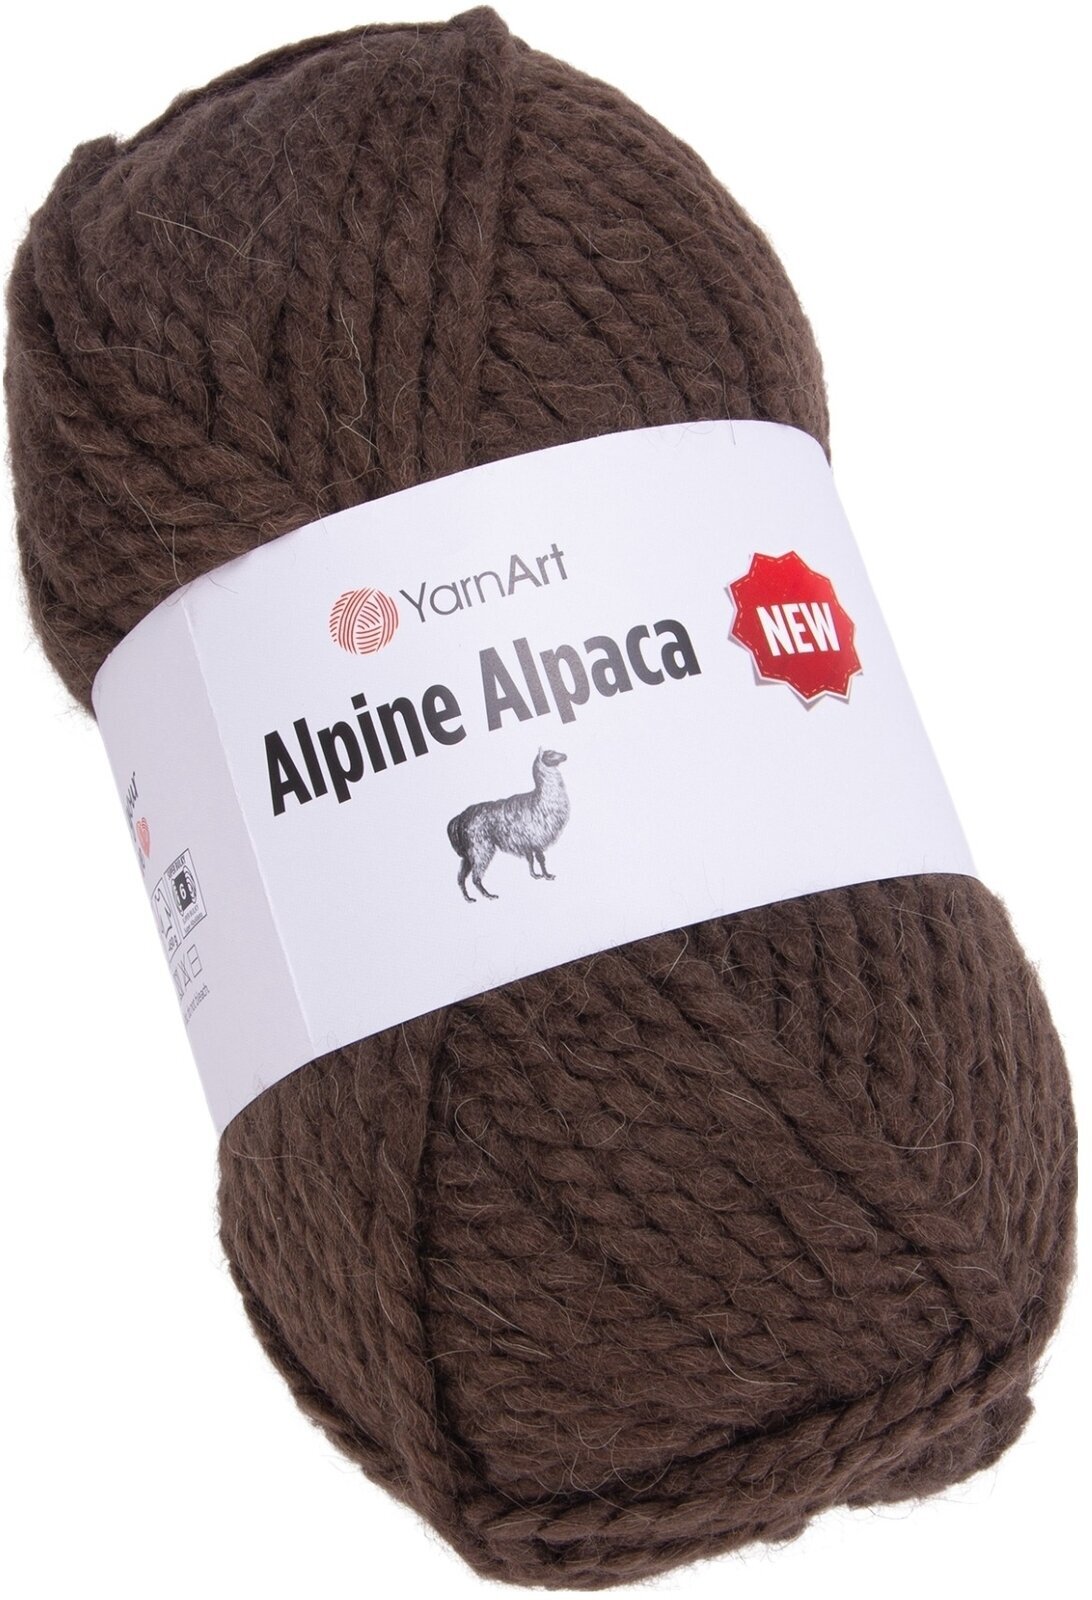 Knitting Yarn Yarn Art Alpine Alpaca Knitting Yarn 1431